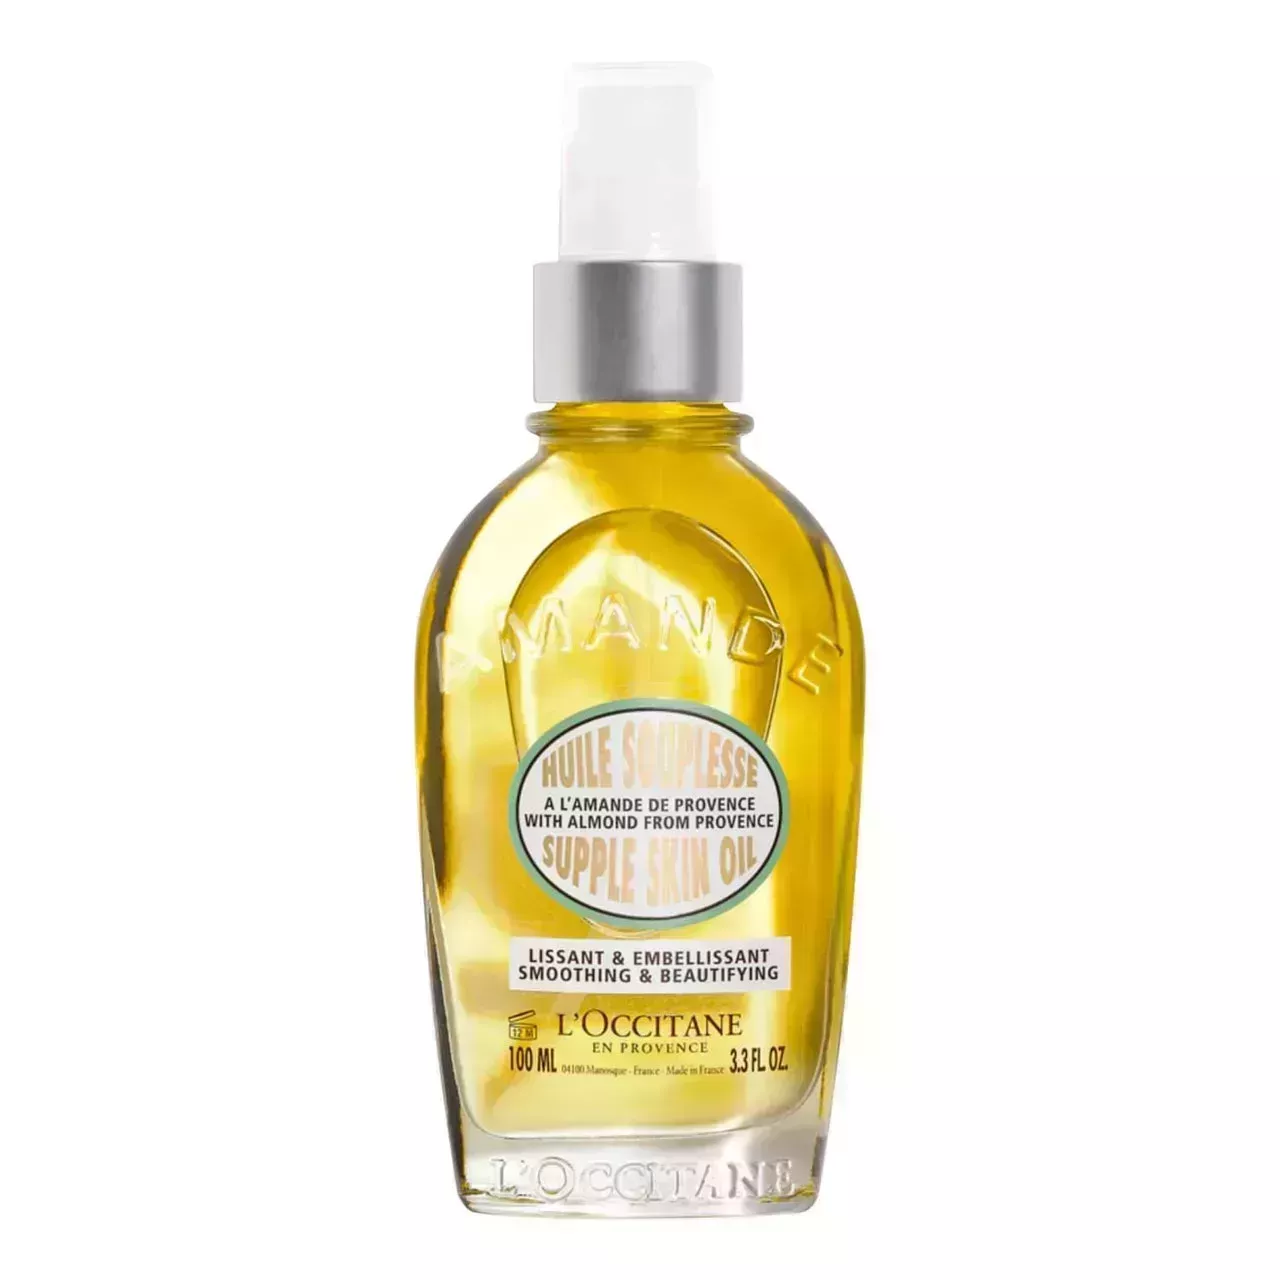 L'Occitane Almond Supple Skin Oil transparent spray bottle of yellow body oil on white background